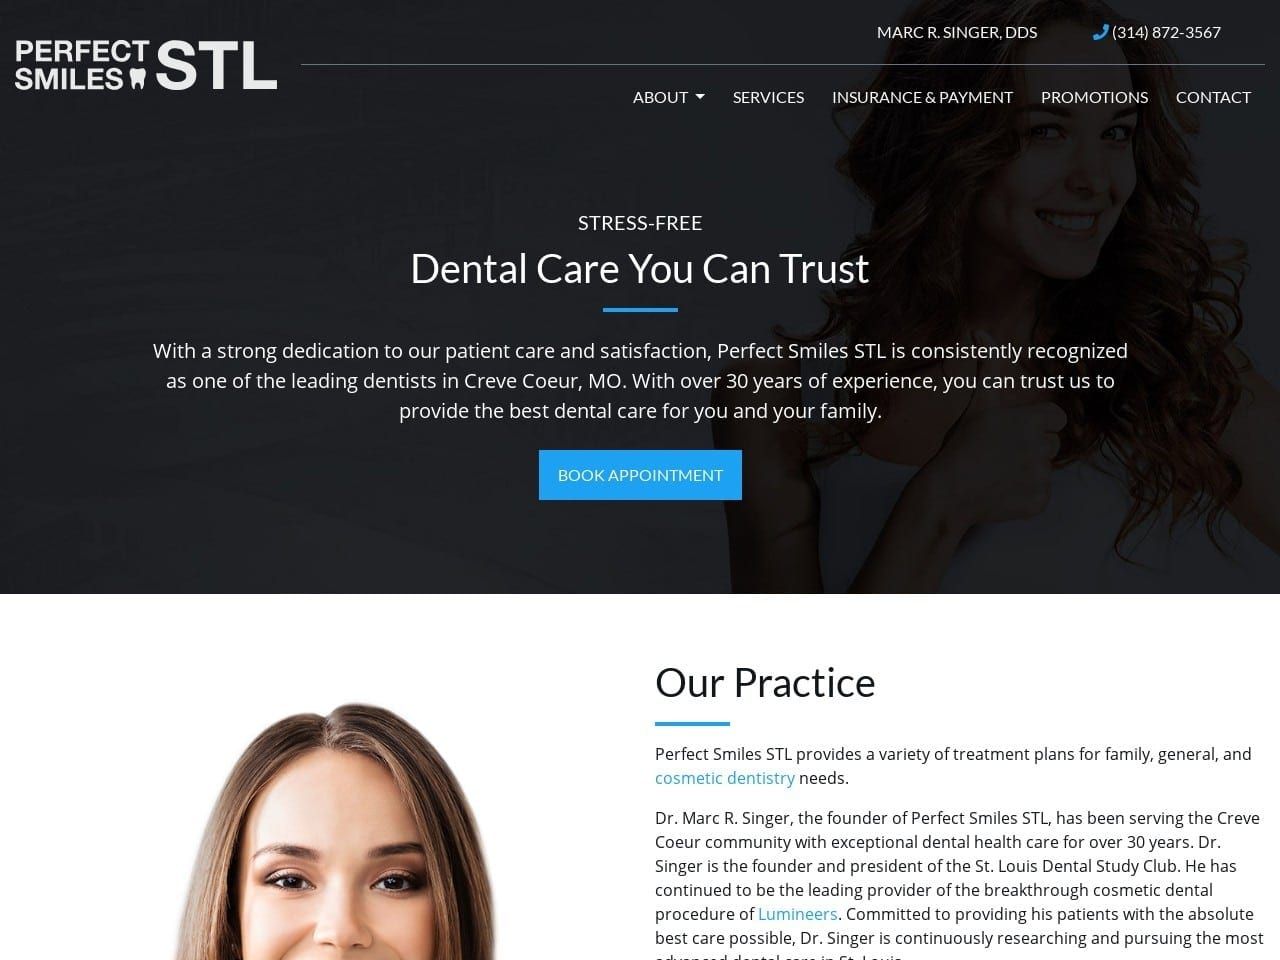 Perfect Smiles Dental Website Screenshot From Url Marcsingerdds.com